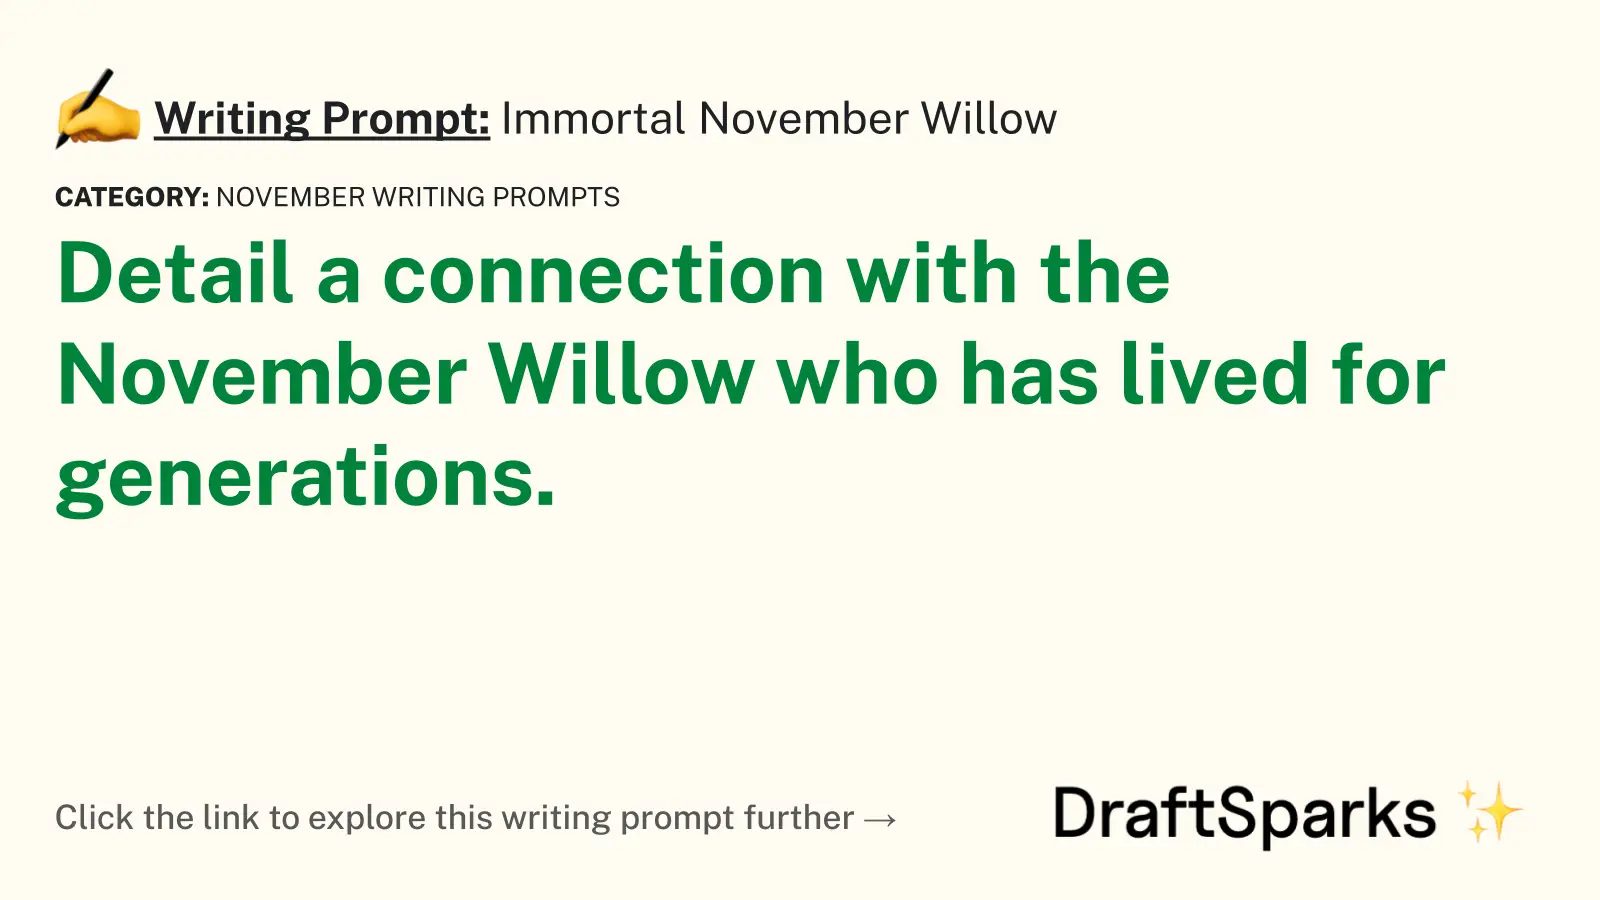 Immortal November Willow